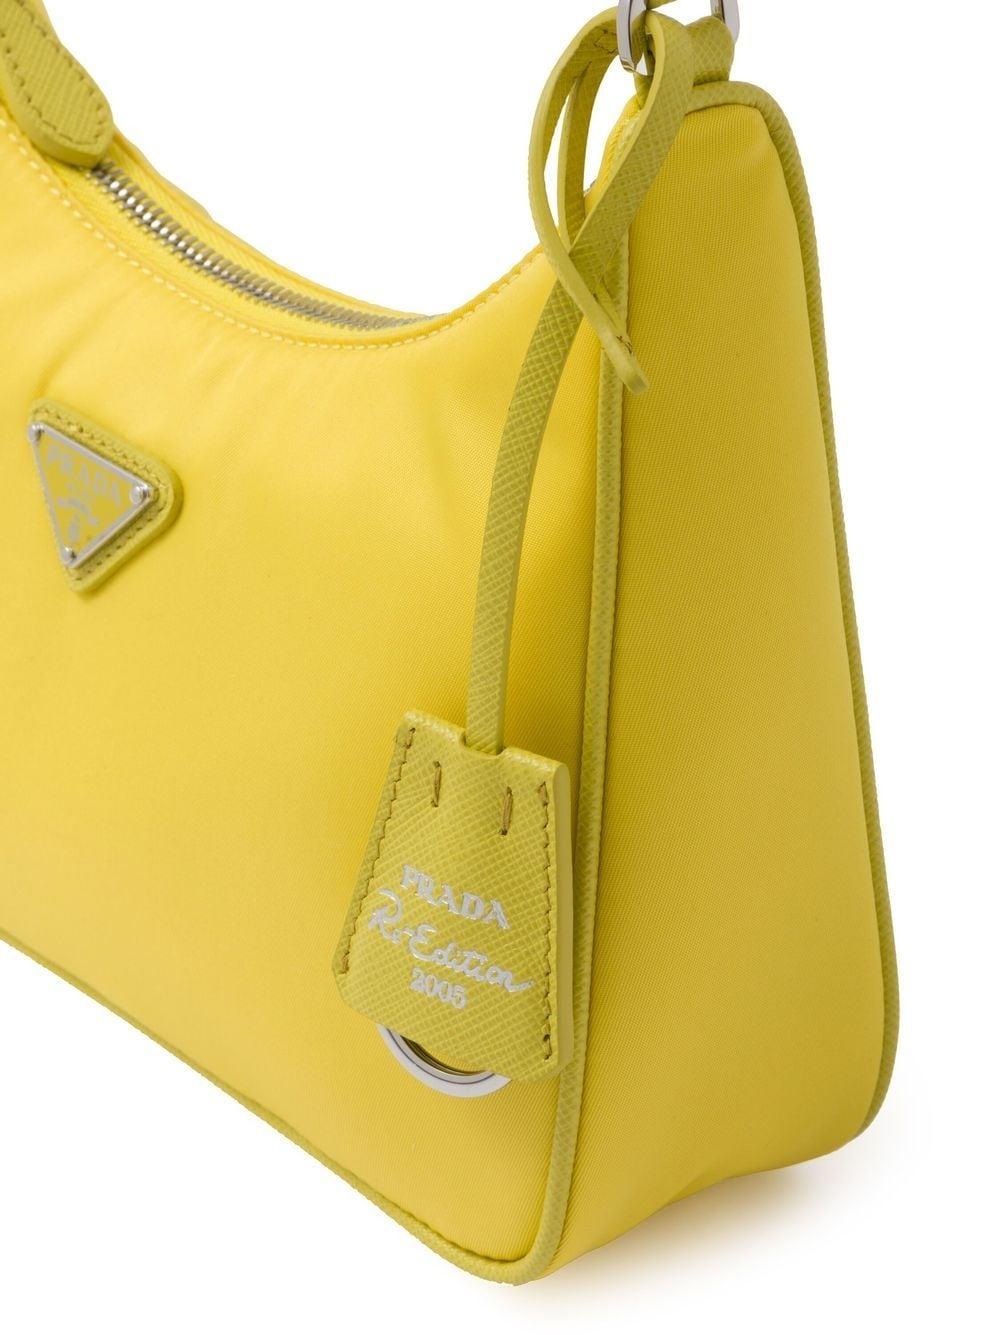 Prada Re-edition 2005 Shoulder Bag in Yellow